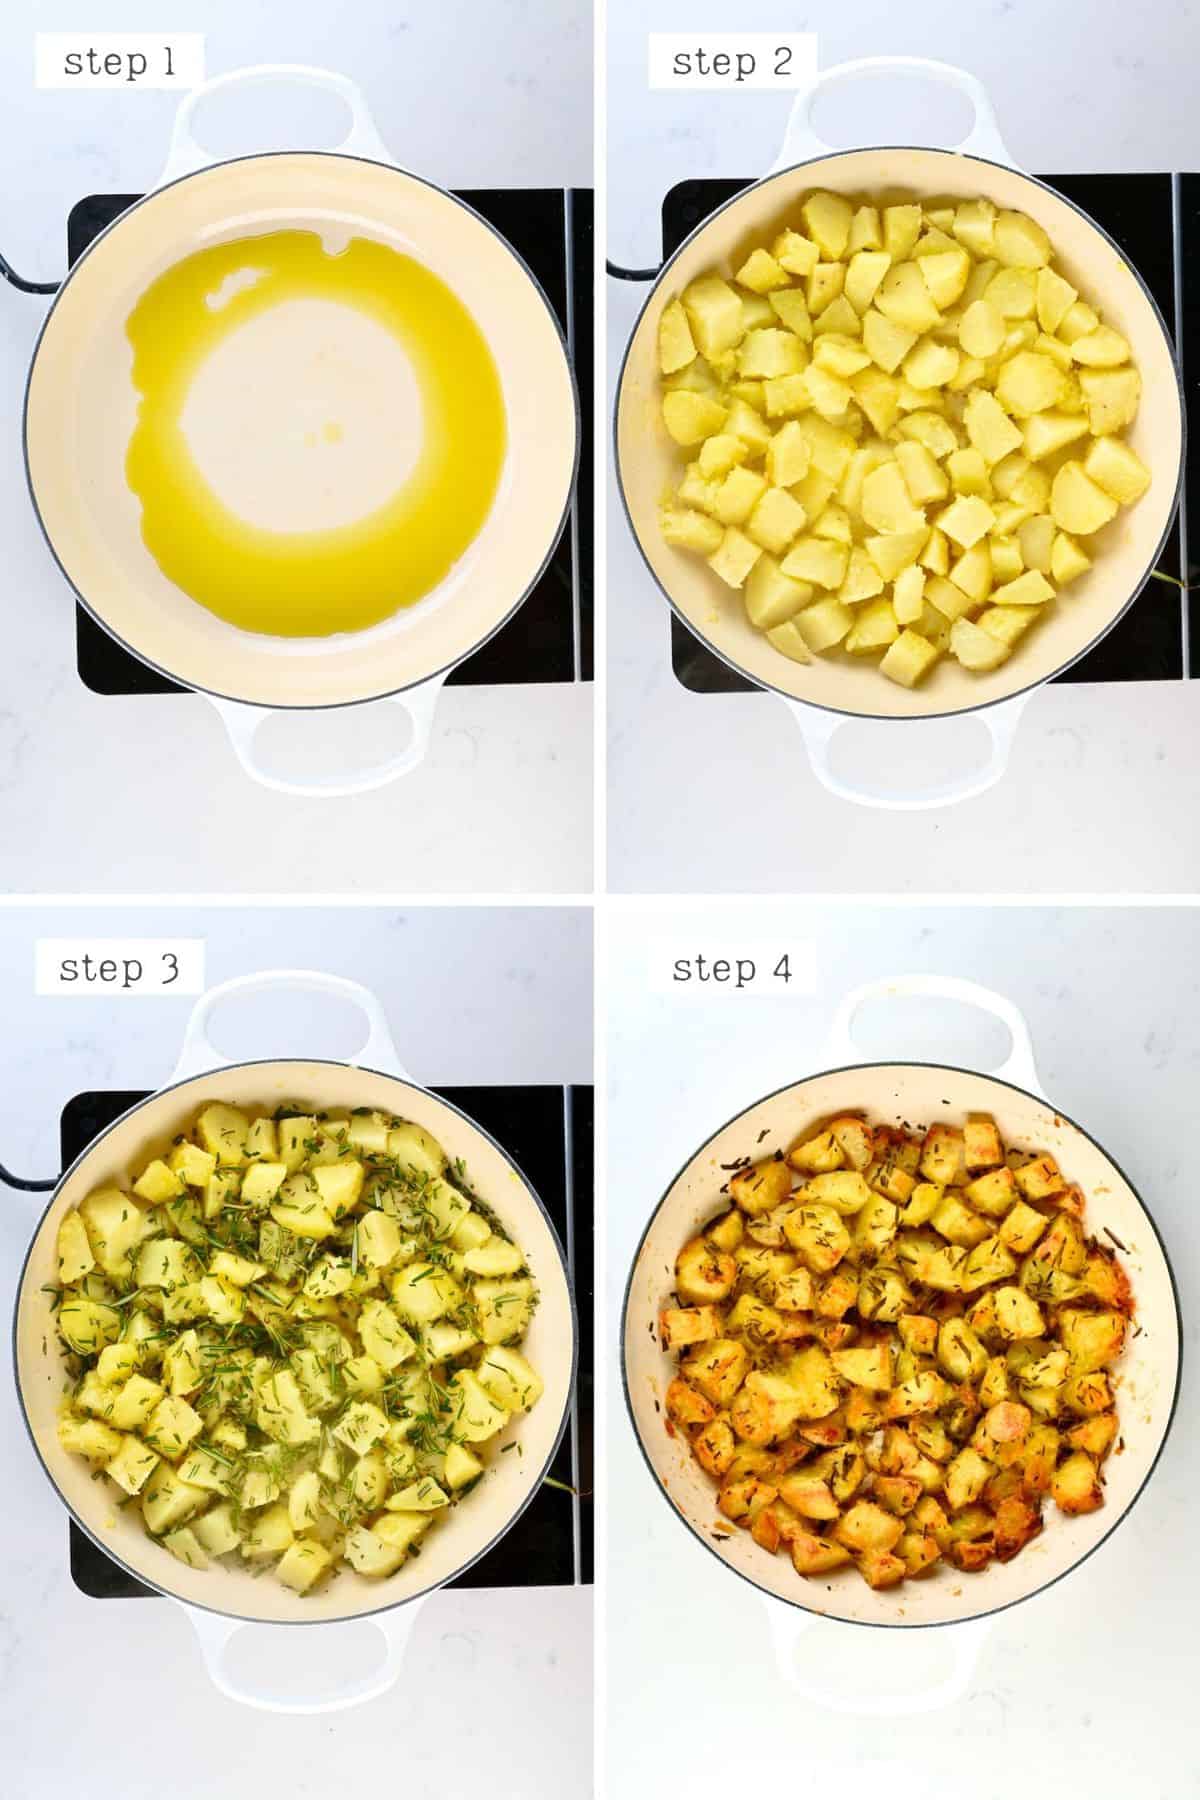 Steps for roasting potatoes